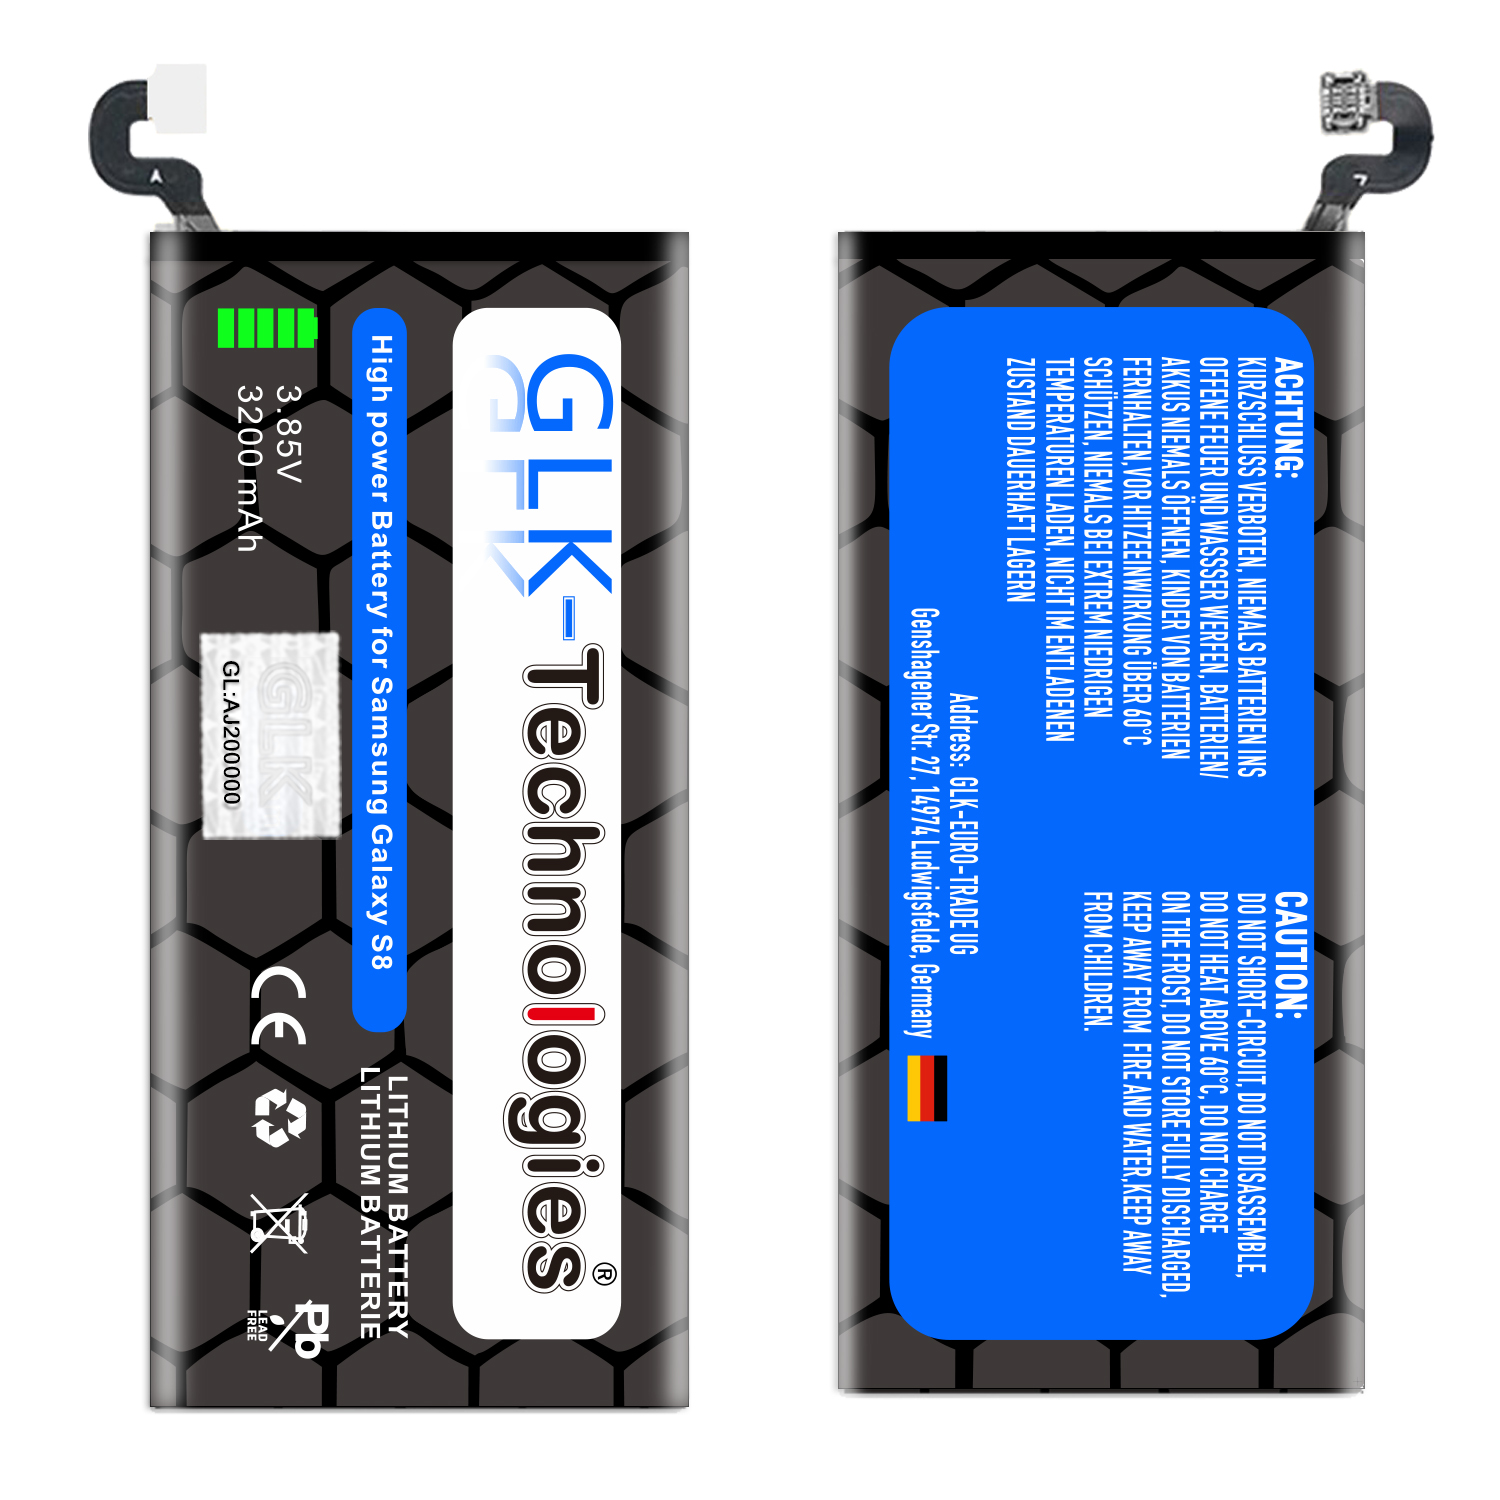 Li-Ion, Galaxy für S8 GLK-TECHNOLOGIES Power Smartphone Samsung EB-BG950BBE | Volt, GLK-S8 High kompatibel 3200 Akku Akku, 3.85 mAh mAh 3200 Ersatz SM-G950F